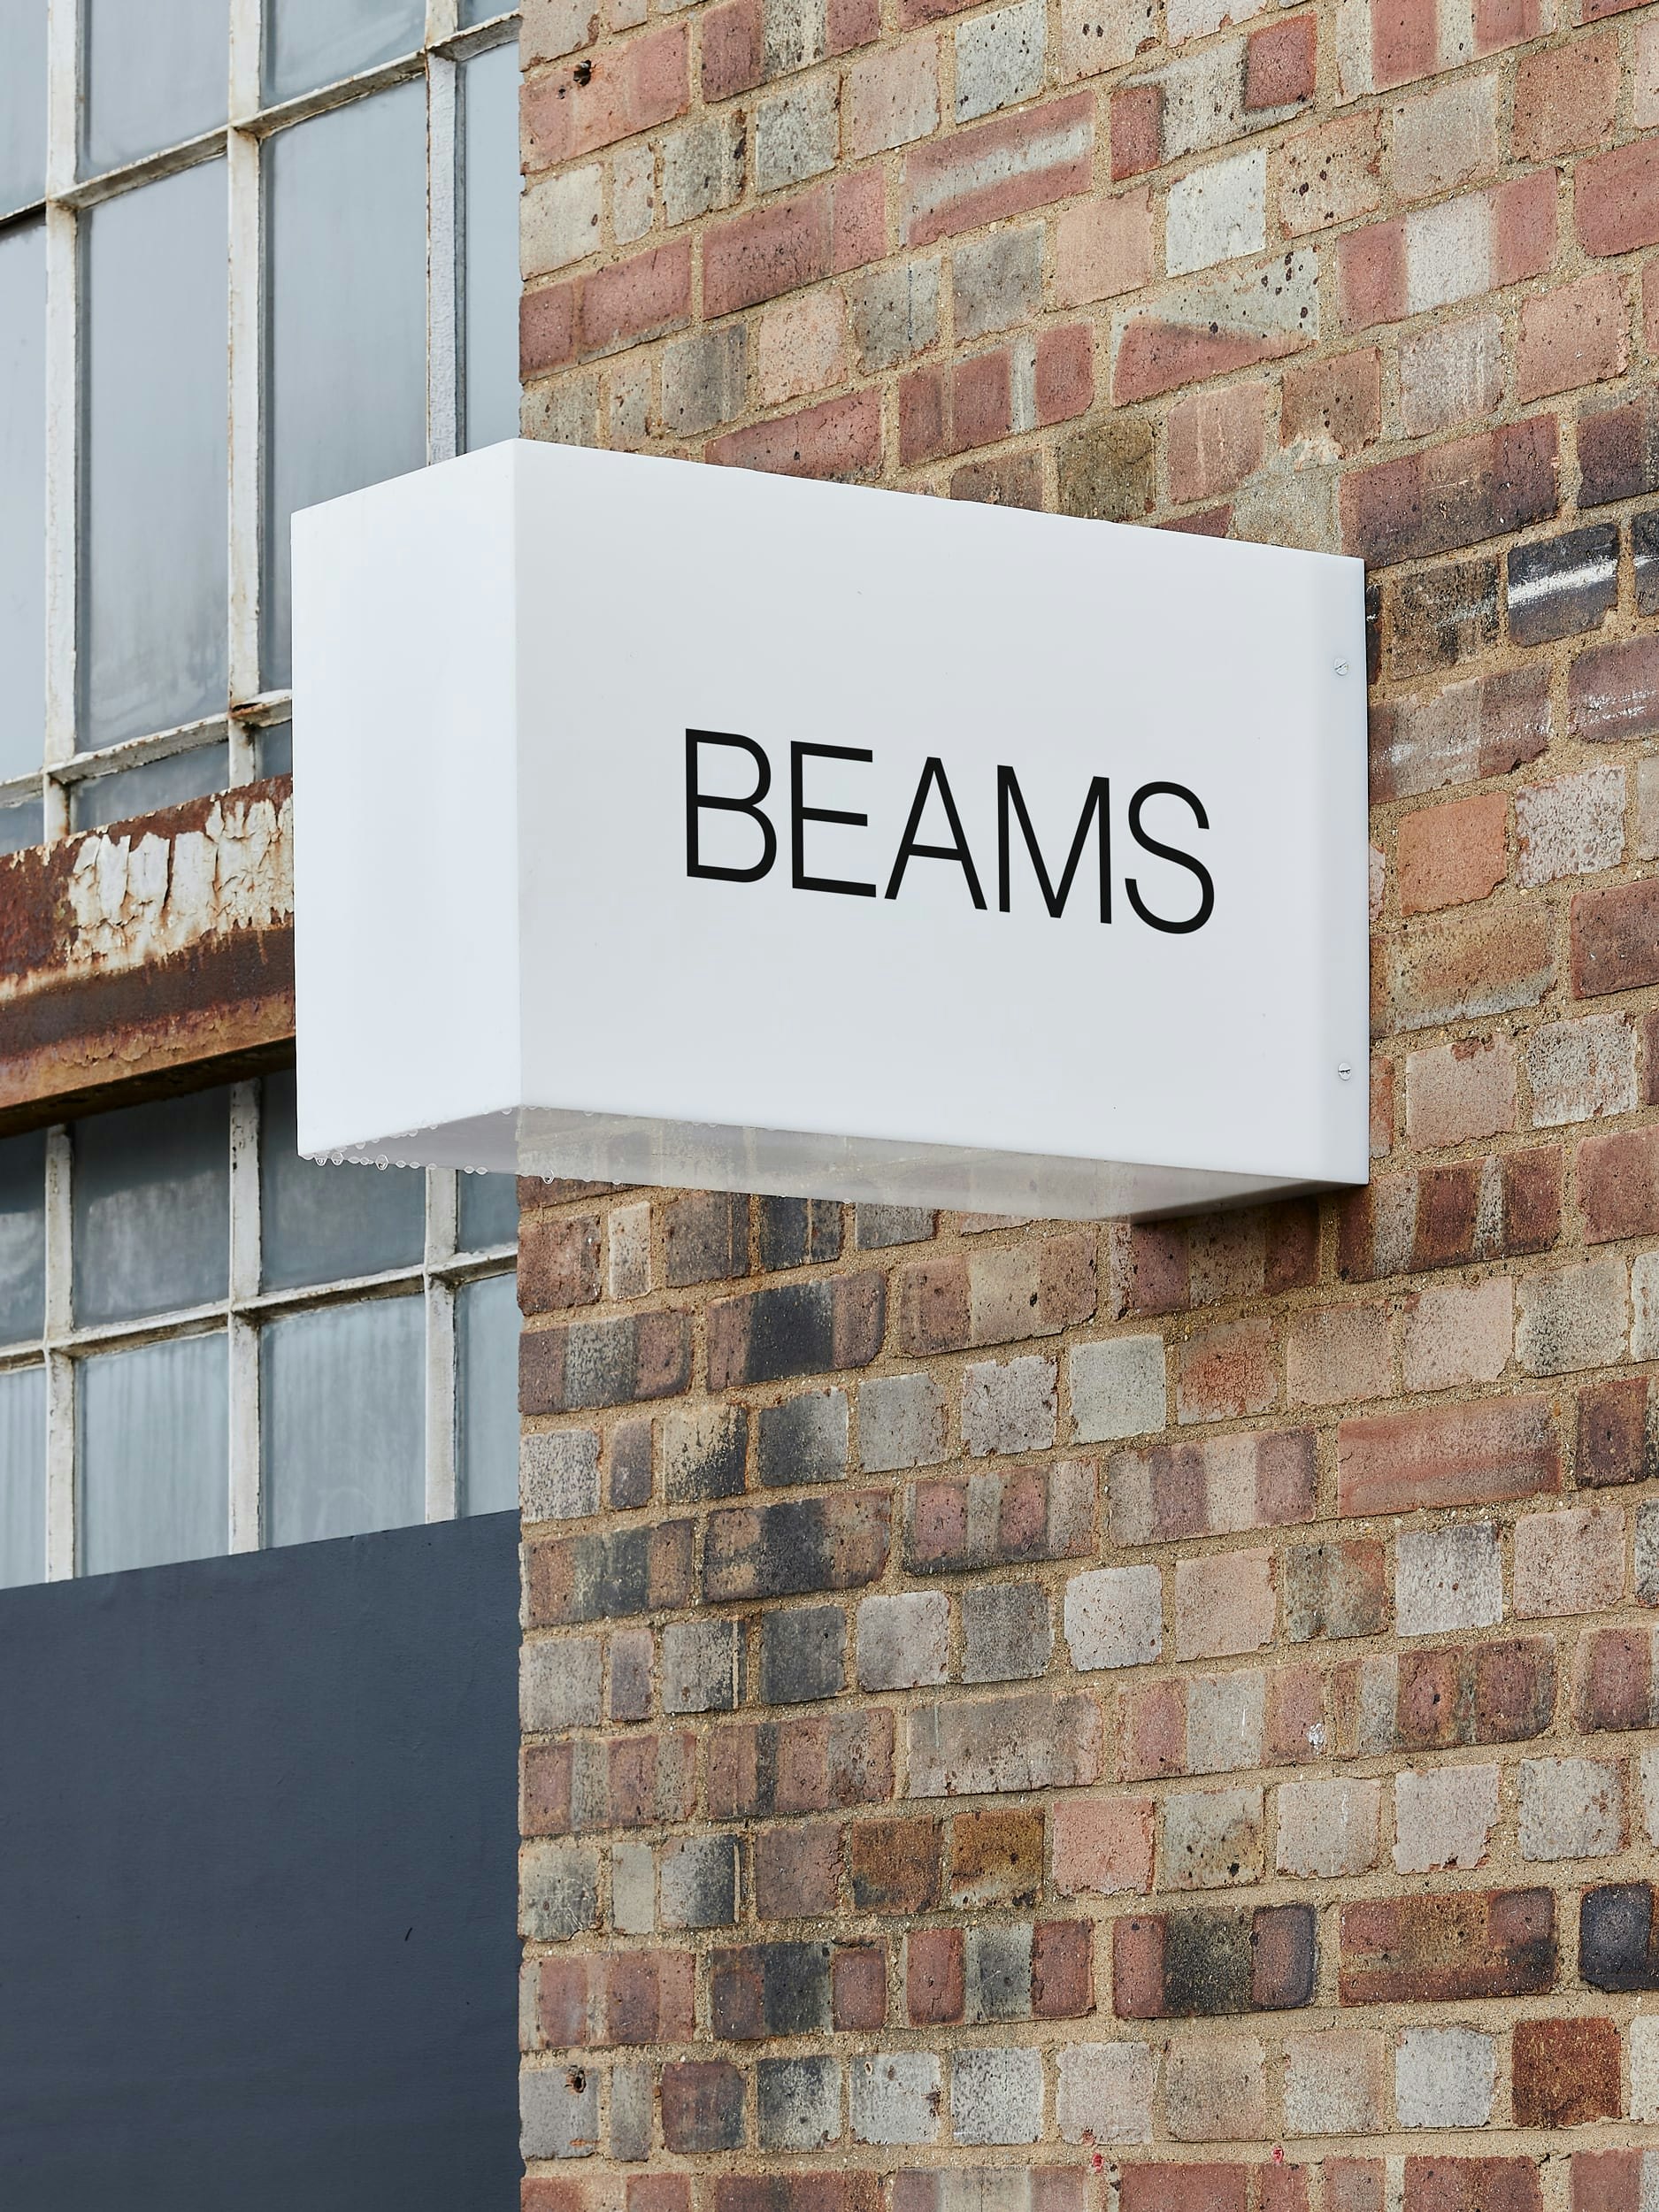 The Beams signage